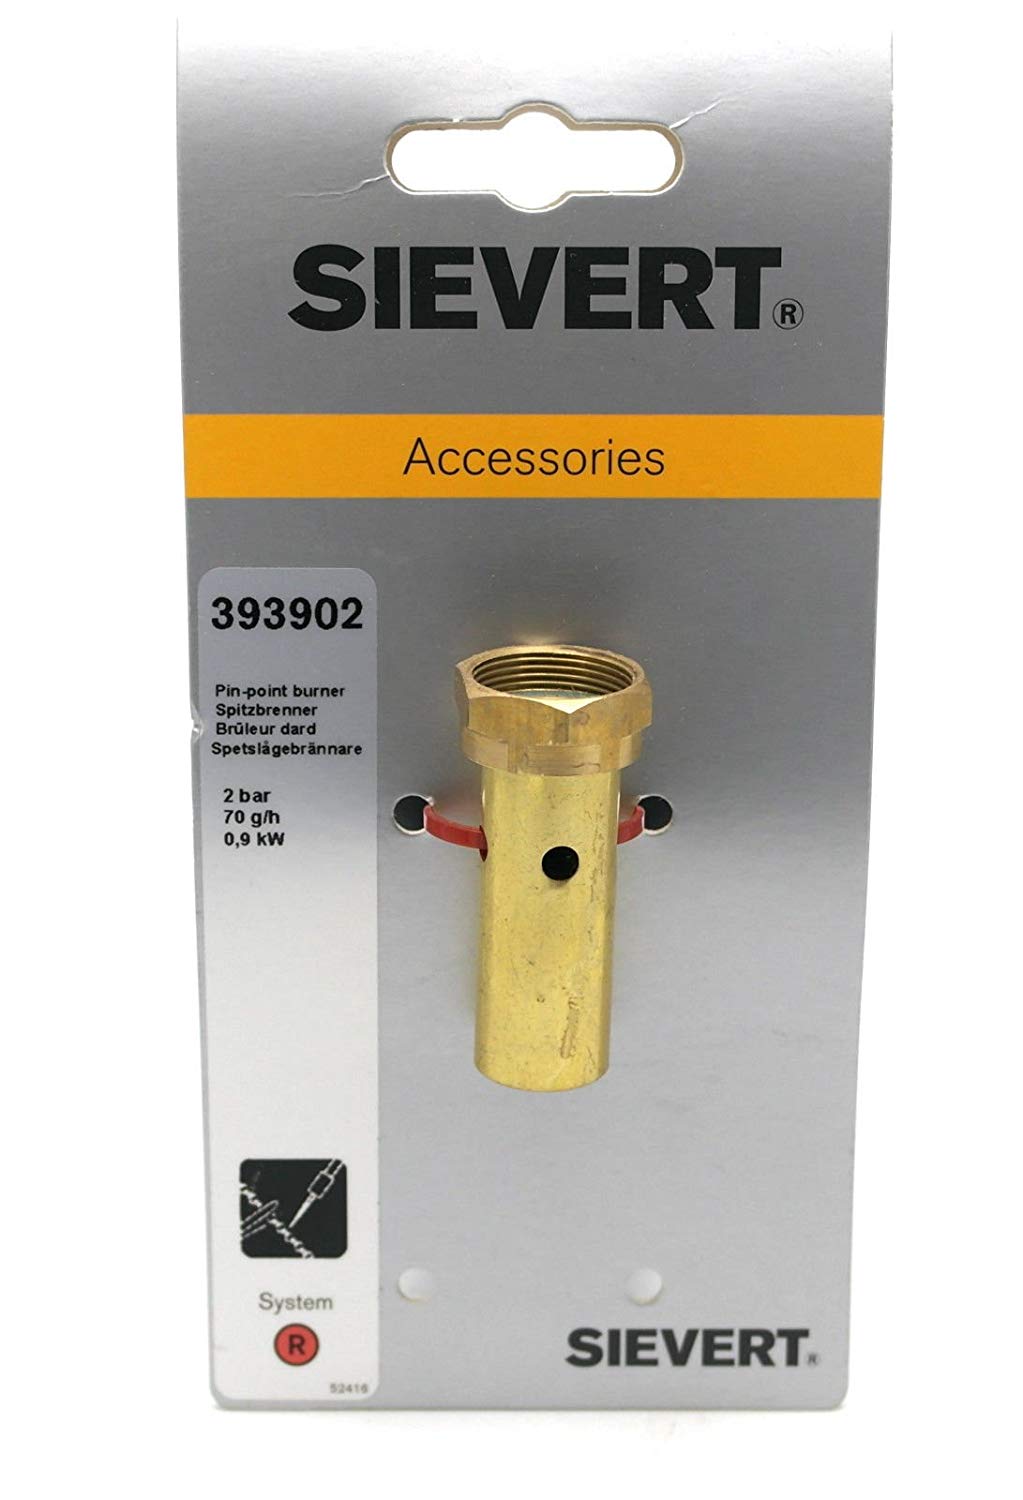 Sievert 393902 17mm Pin-Point Burner Fits Pro 86/88 